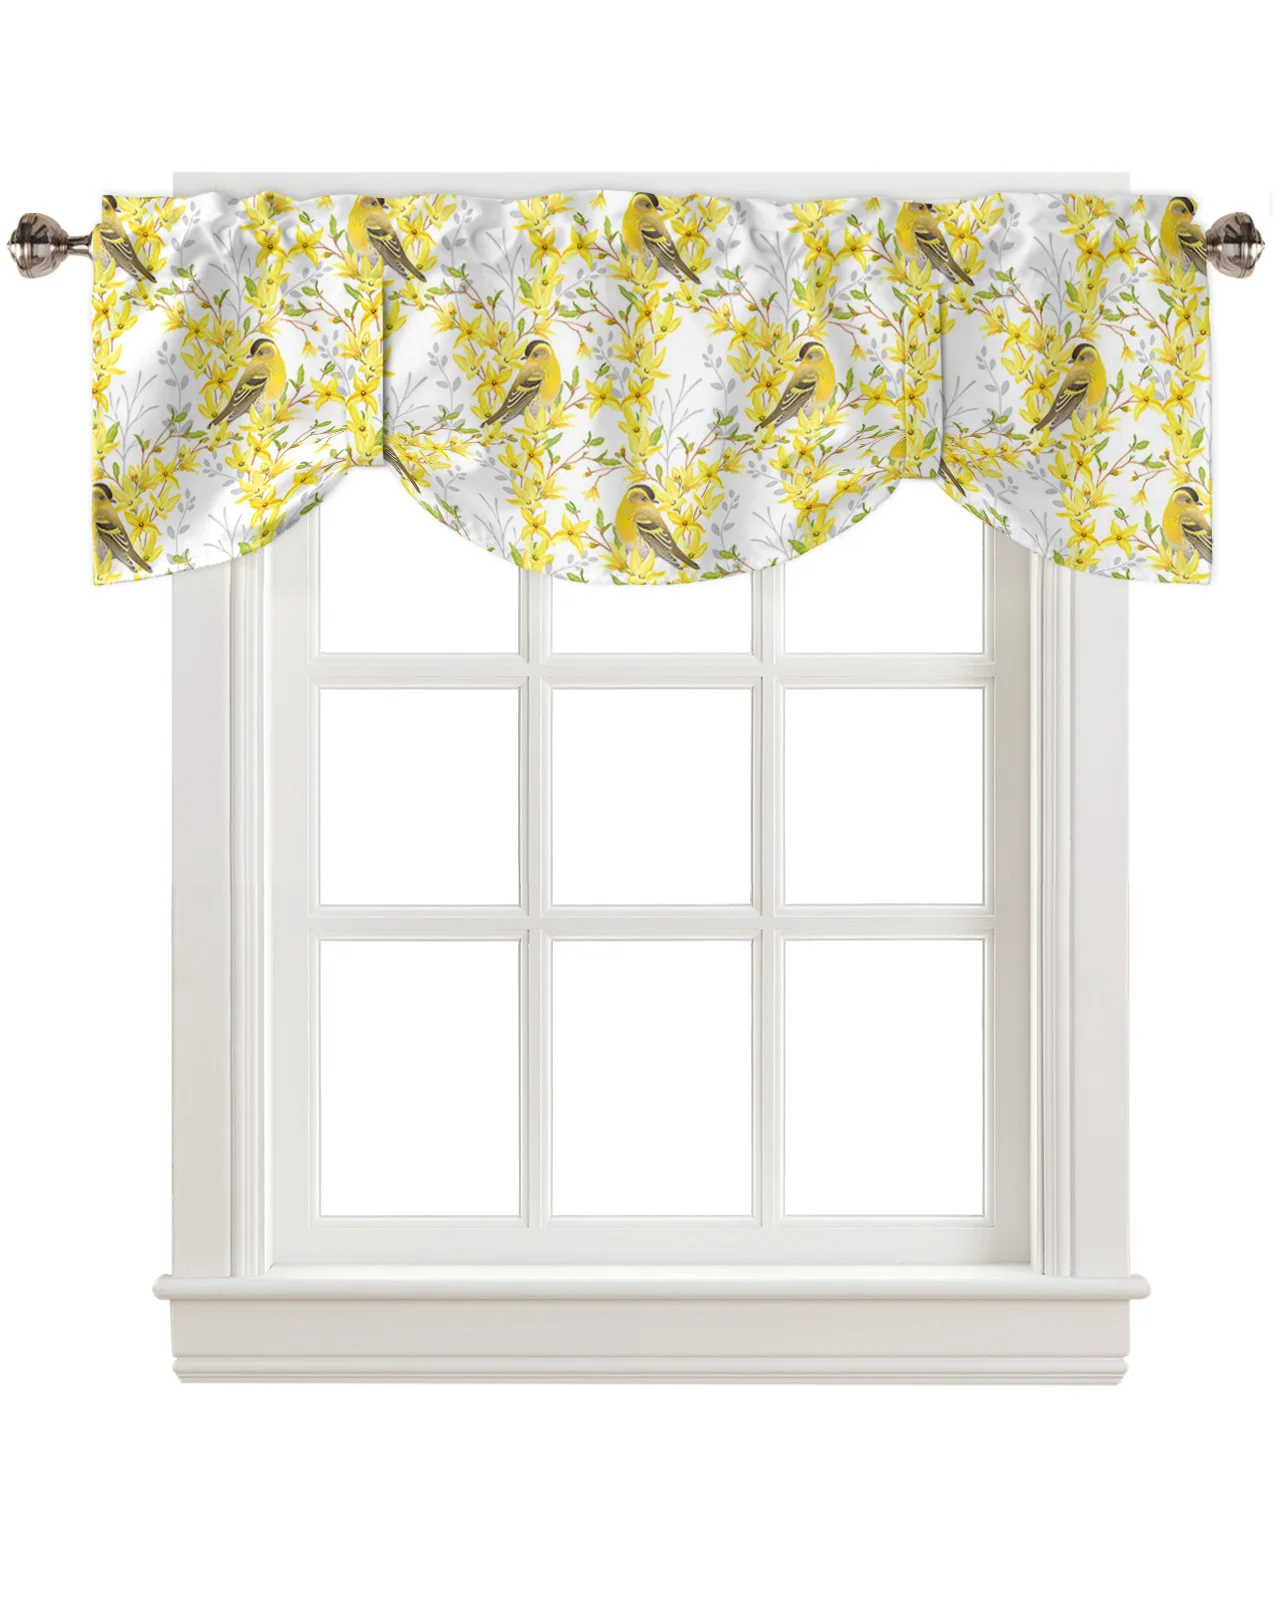 Желтые цветы и малиновки, Занавеска на окно, Гостиная, Кухонный шкаф, Балдахин, карниз, Карманный балдахин